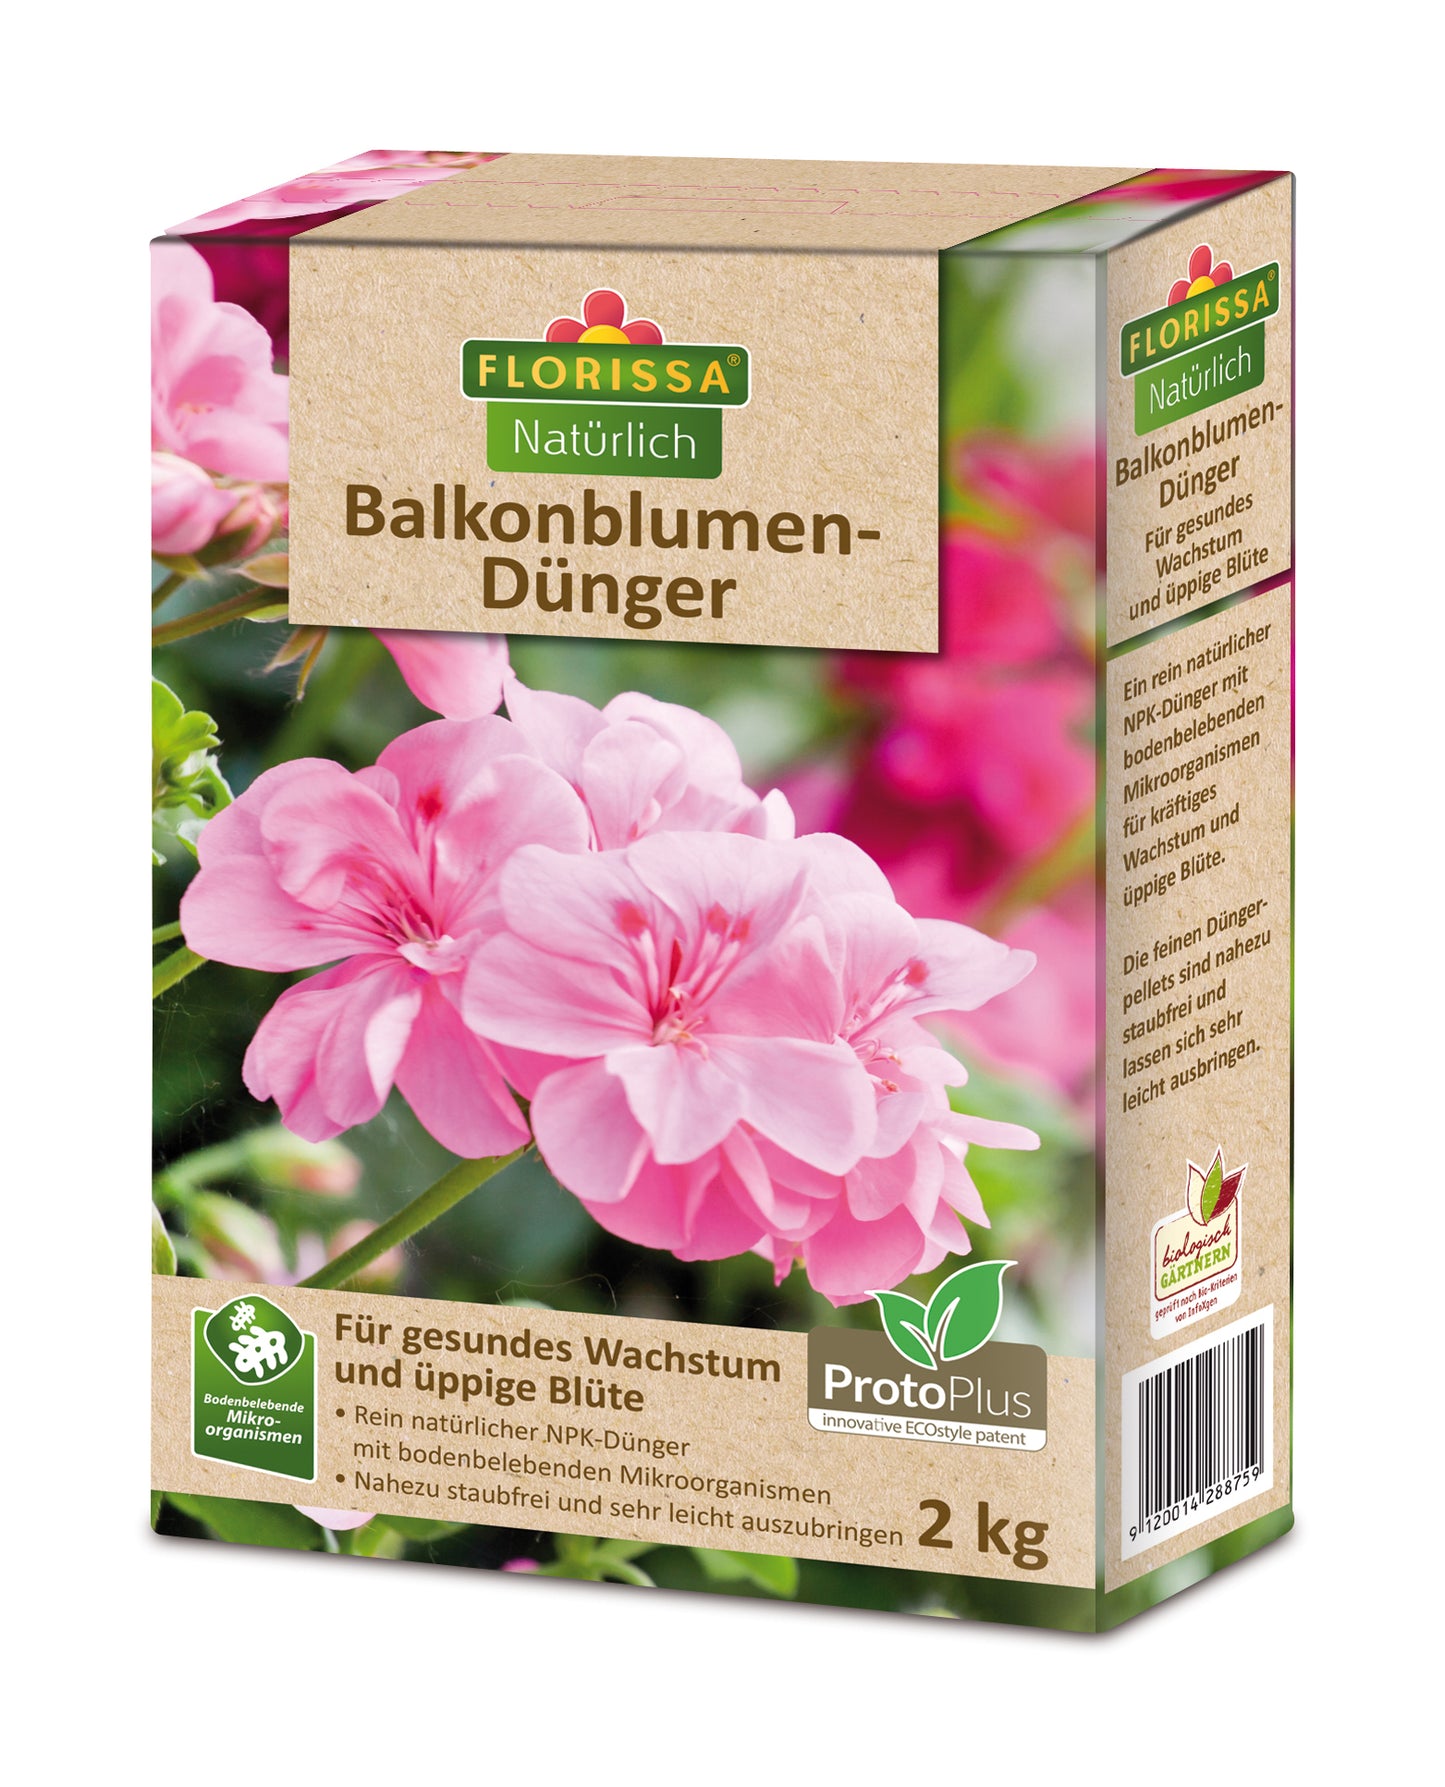 Balkonblumen-Dünger ProtoPlus (2 kg) | Dünger von Florissa